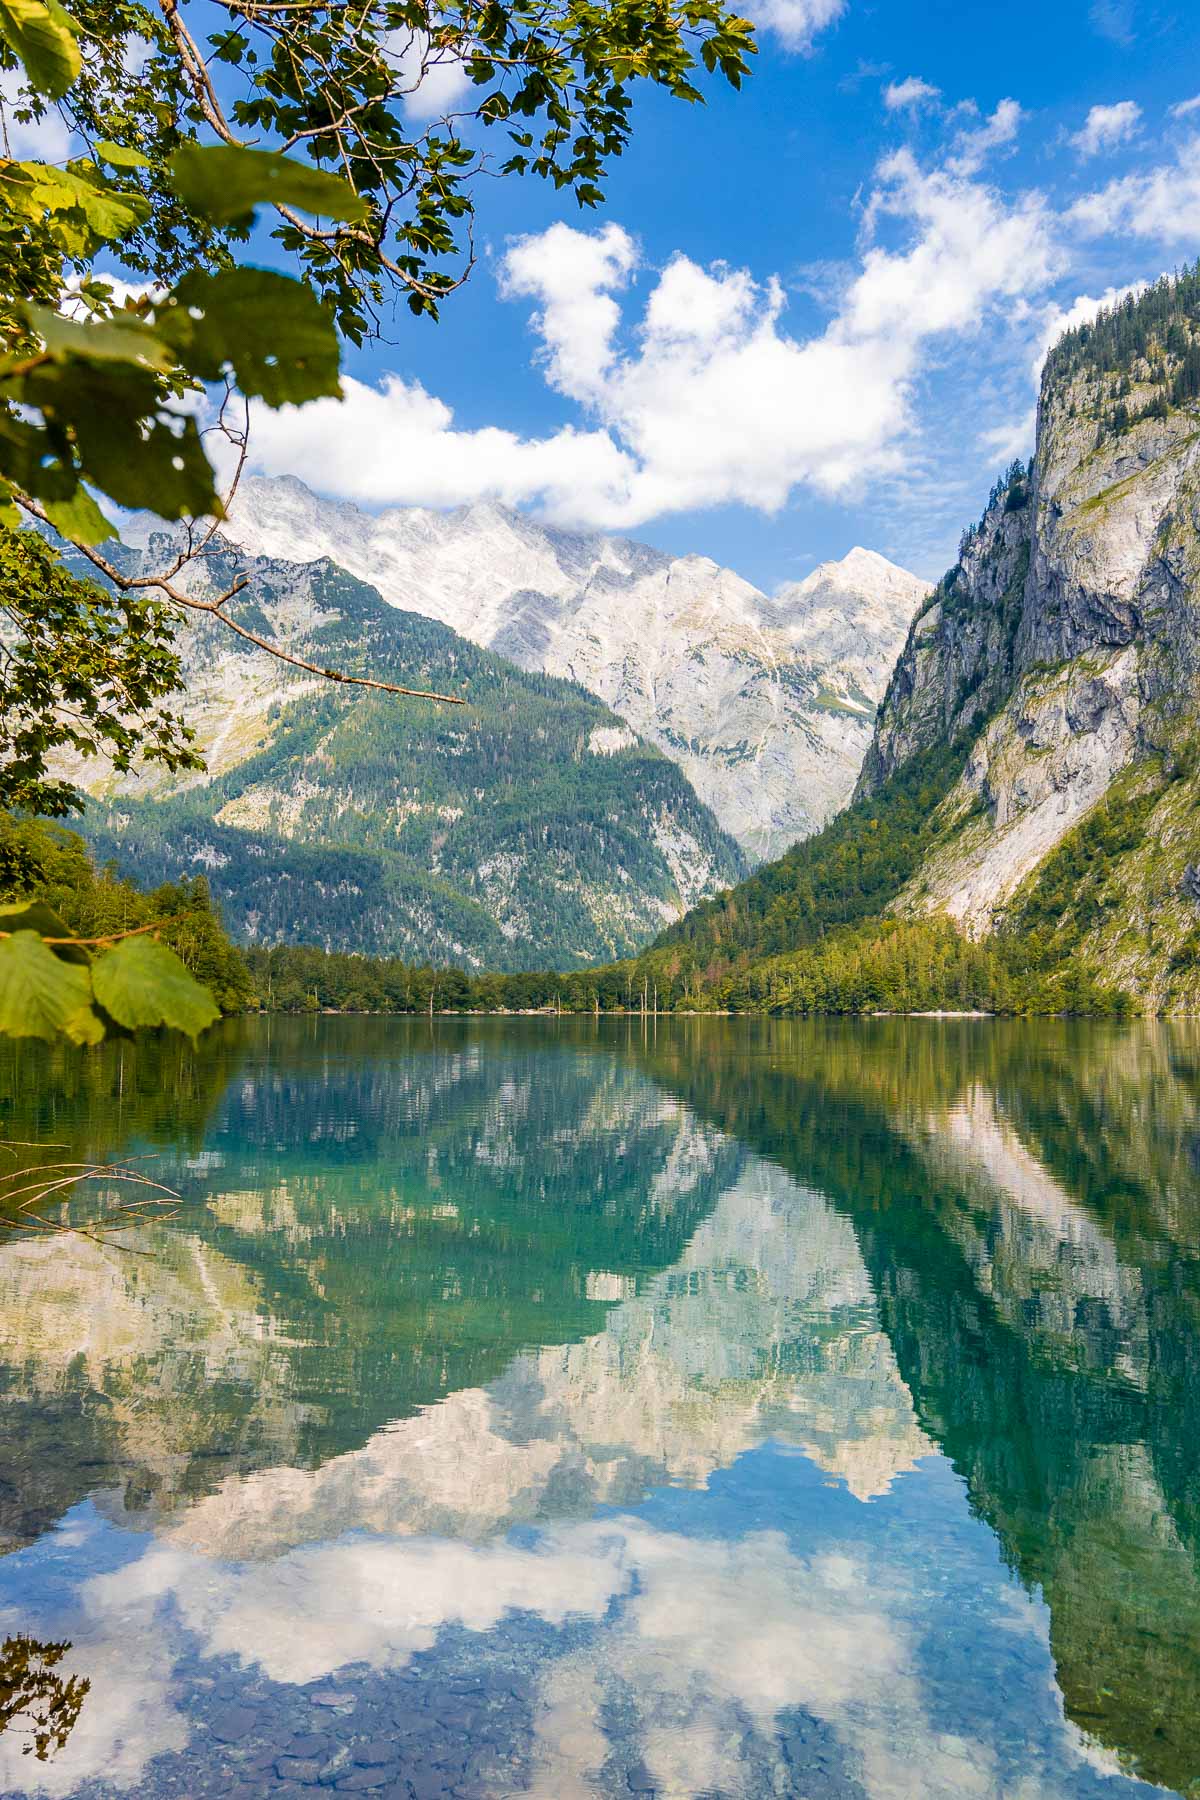 Beautiful reflections on Lake Obersee, Germany